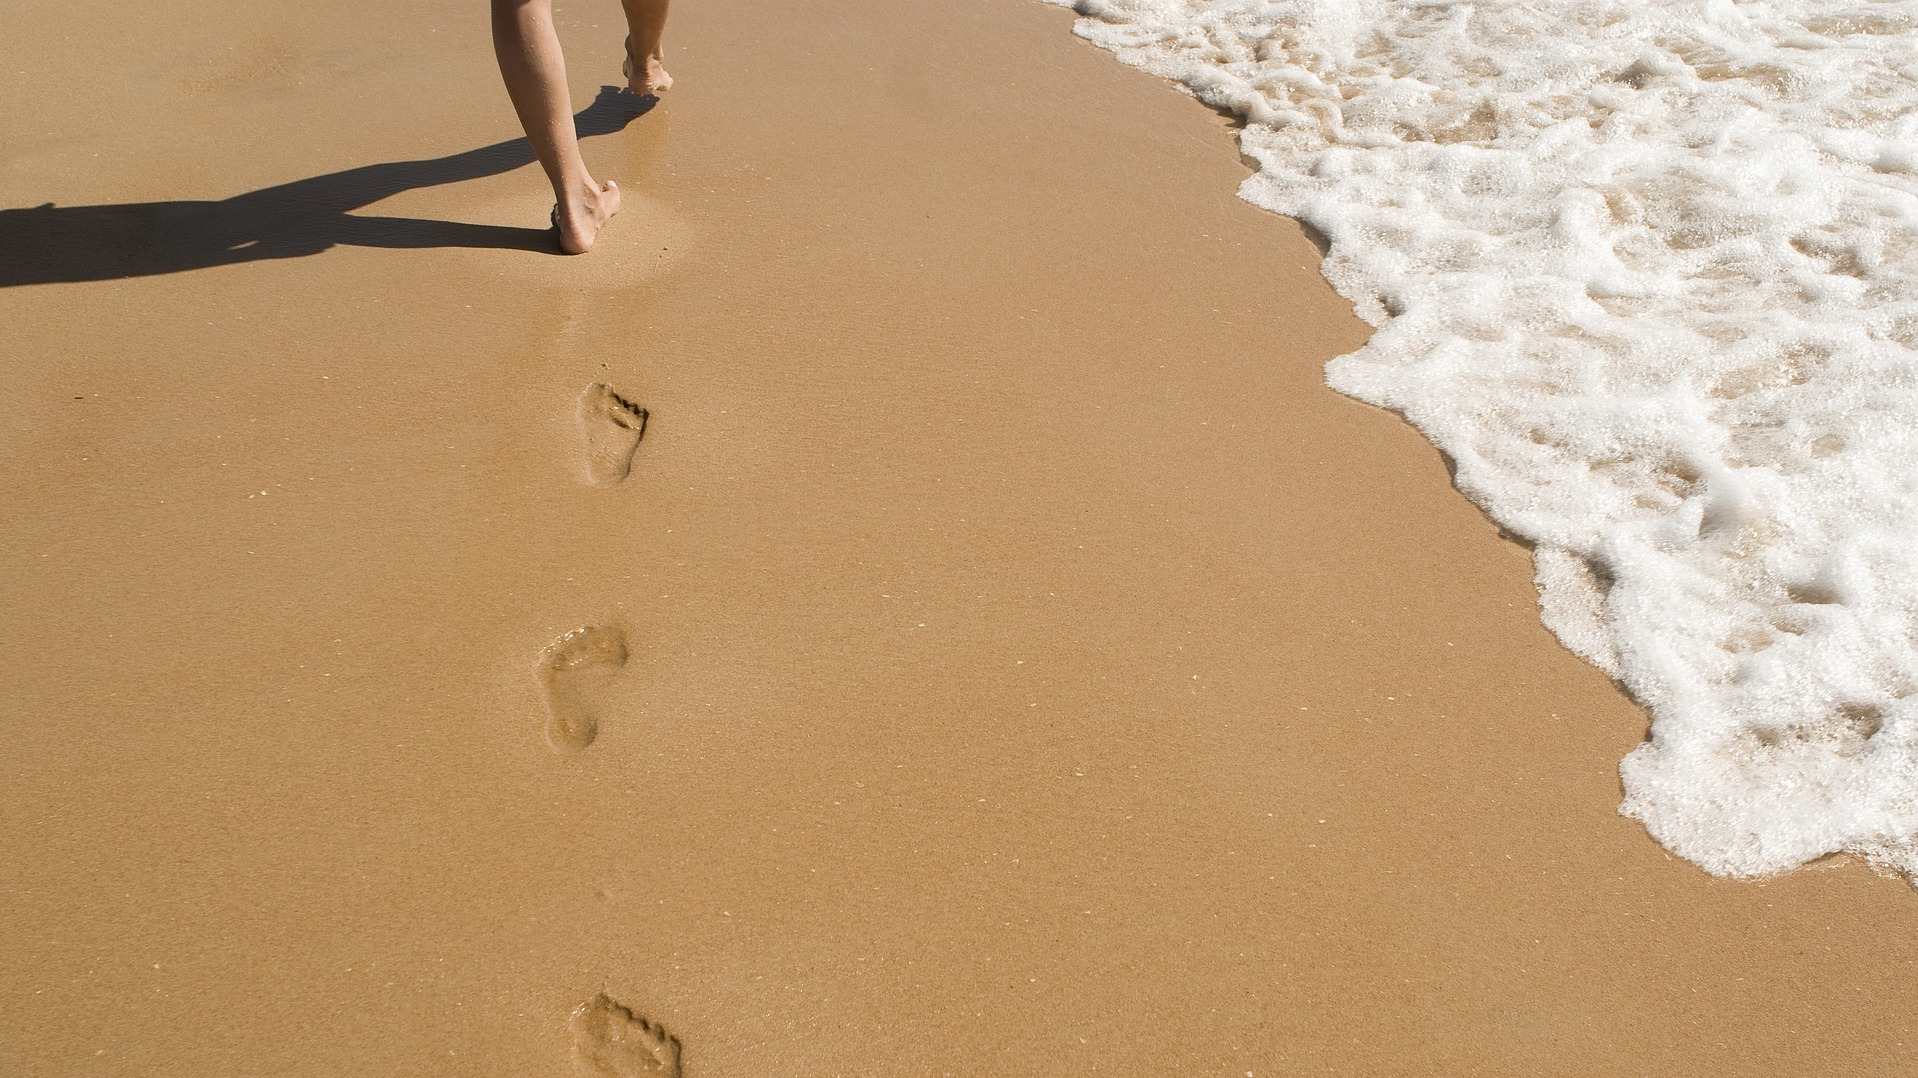 Bare feet walking on beach